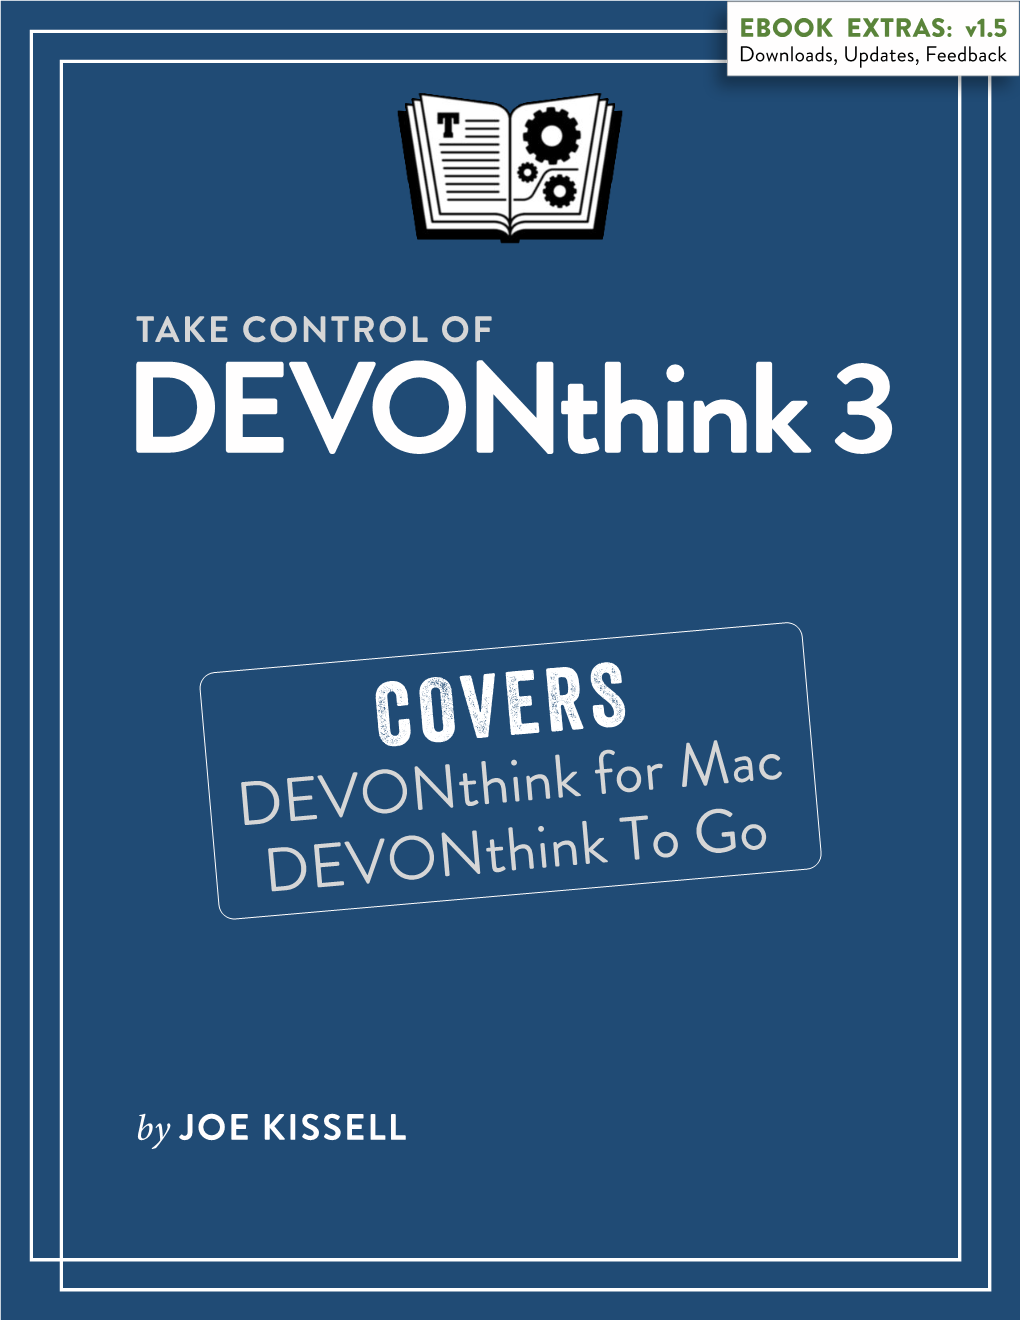 Take Control of Devonthink 3 (1.5)